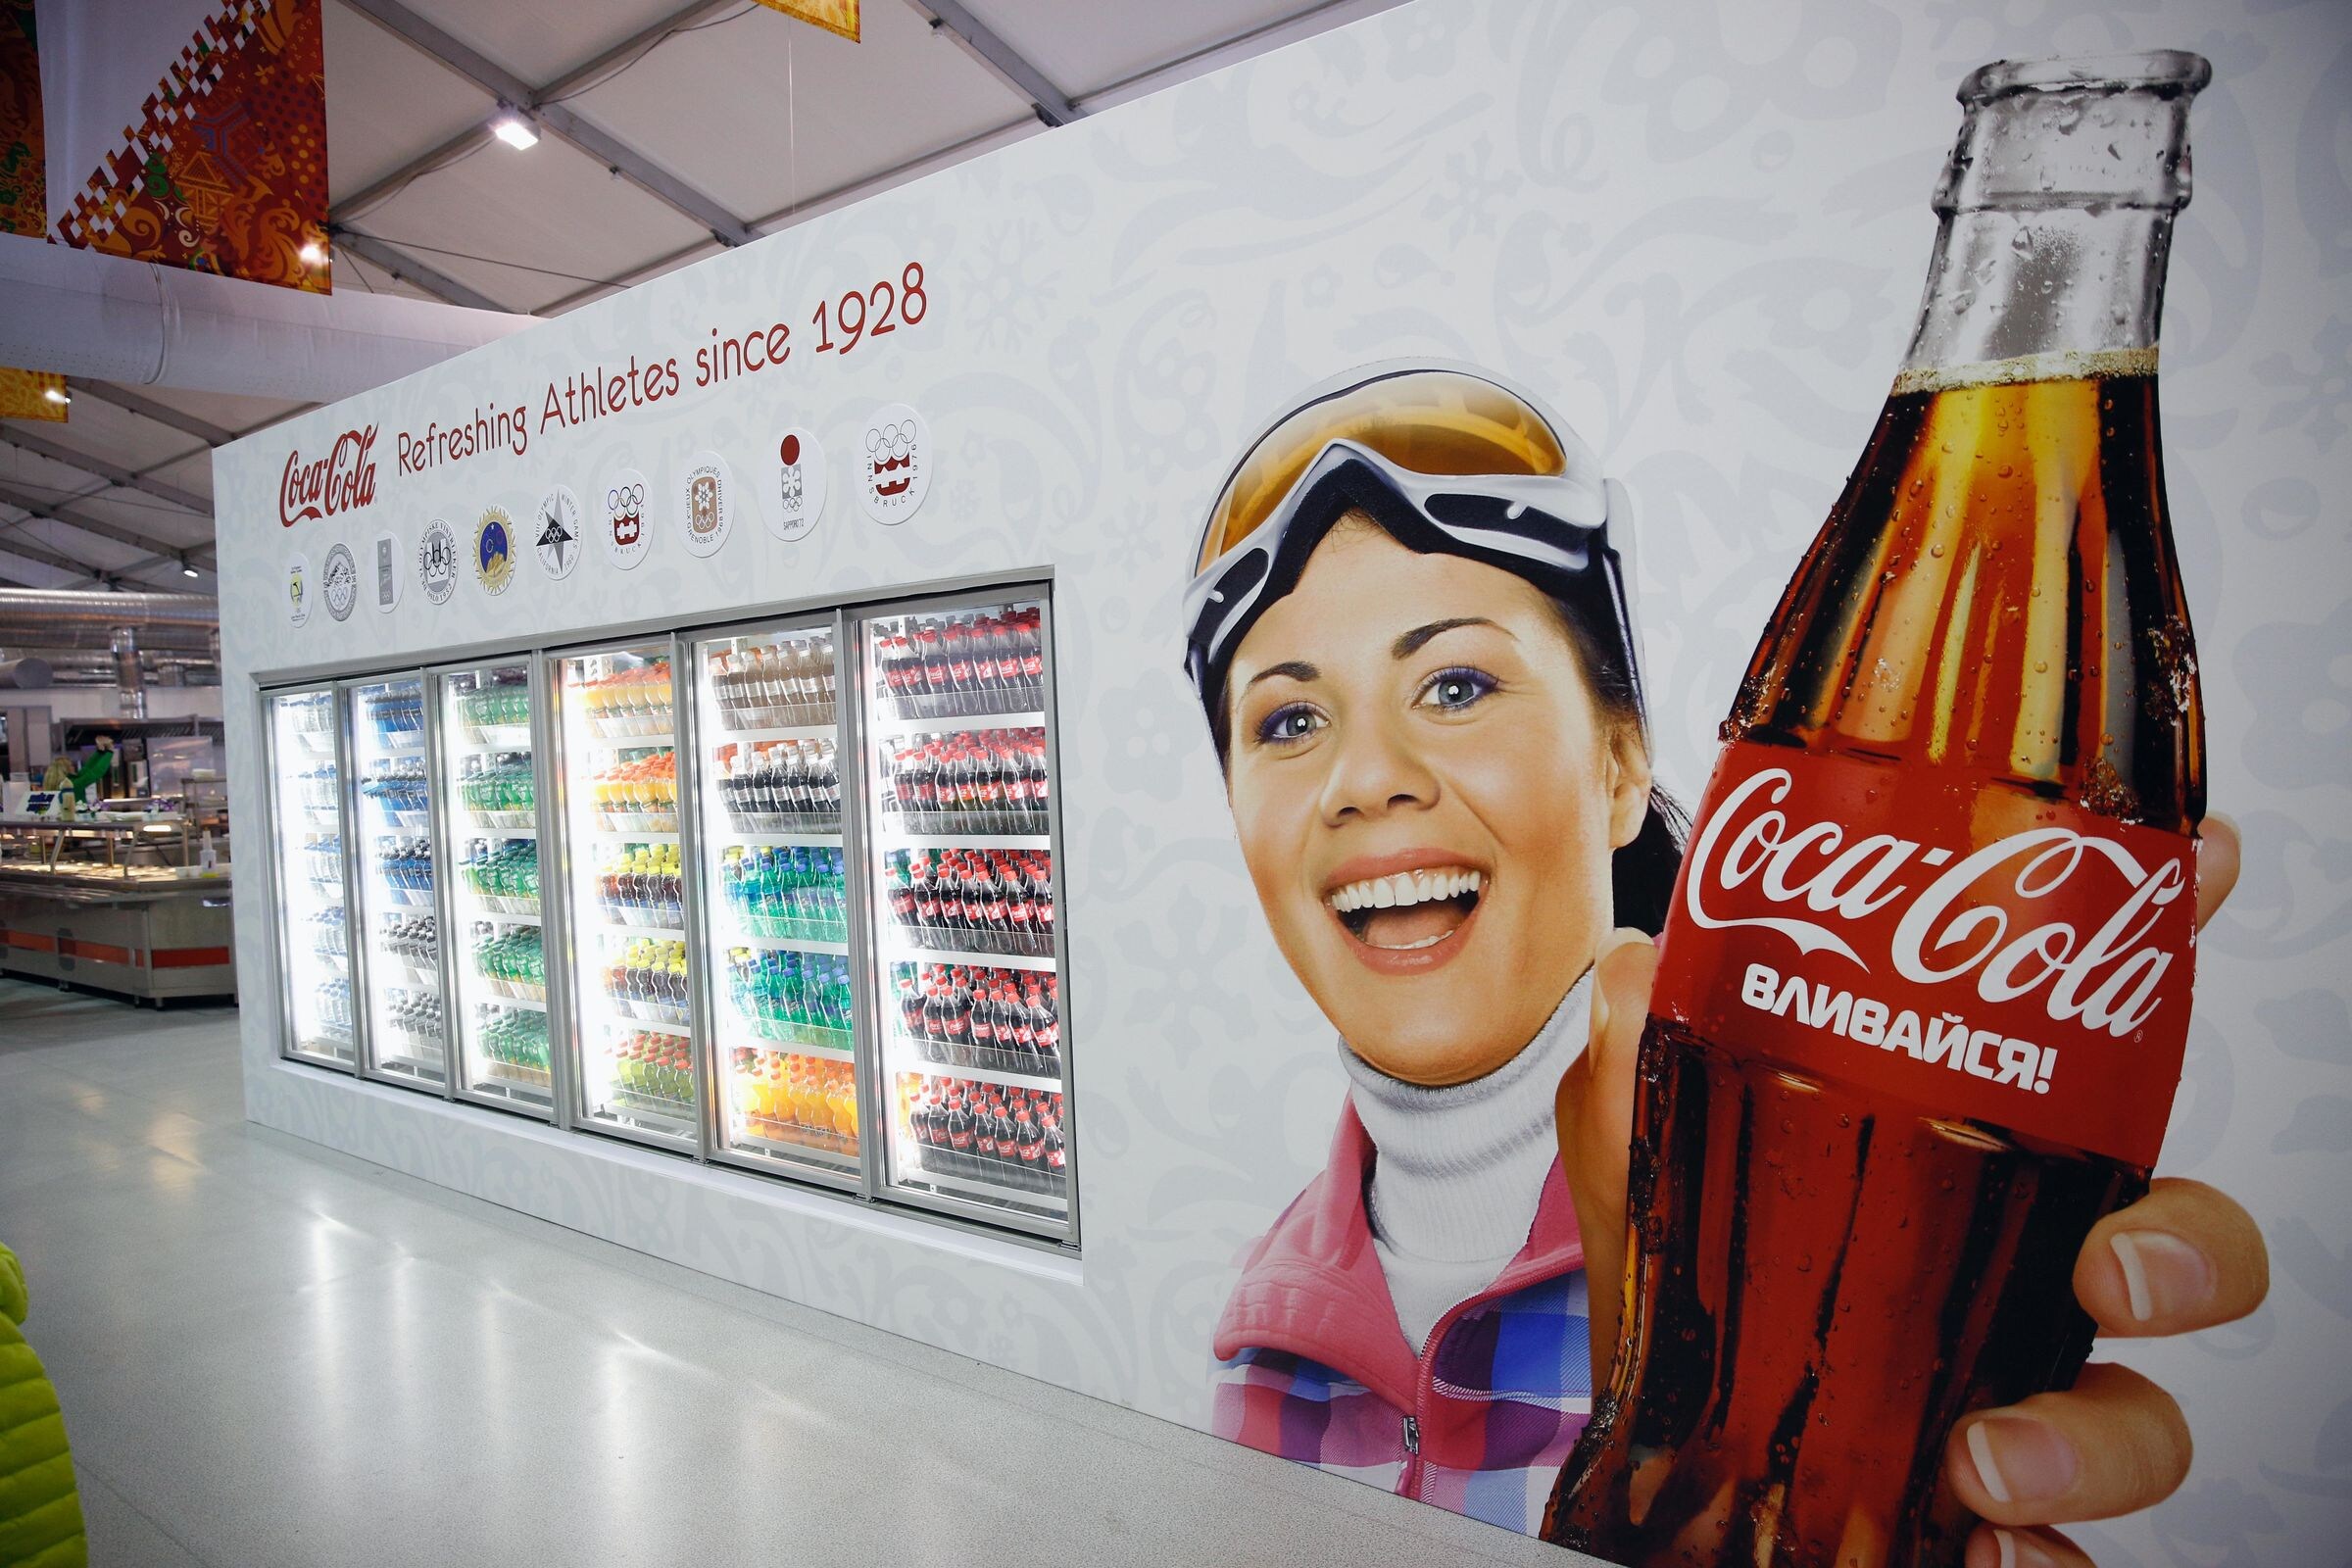 Sponsors Coca Cola